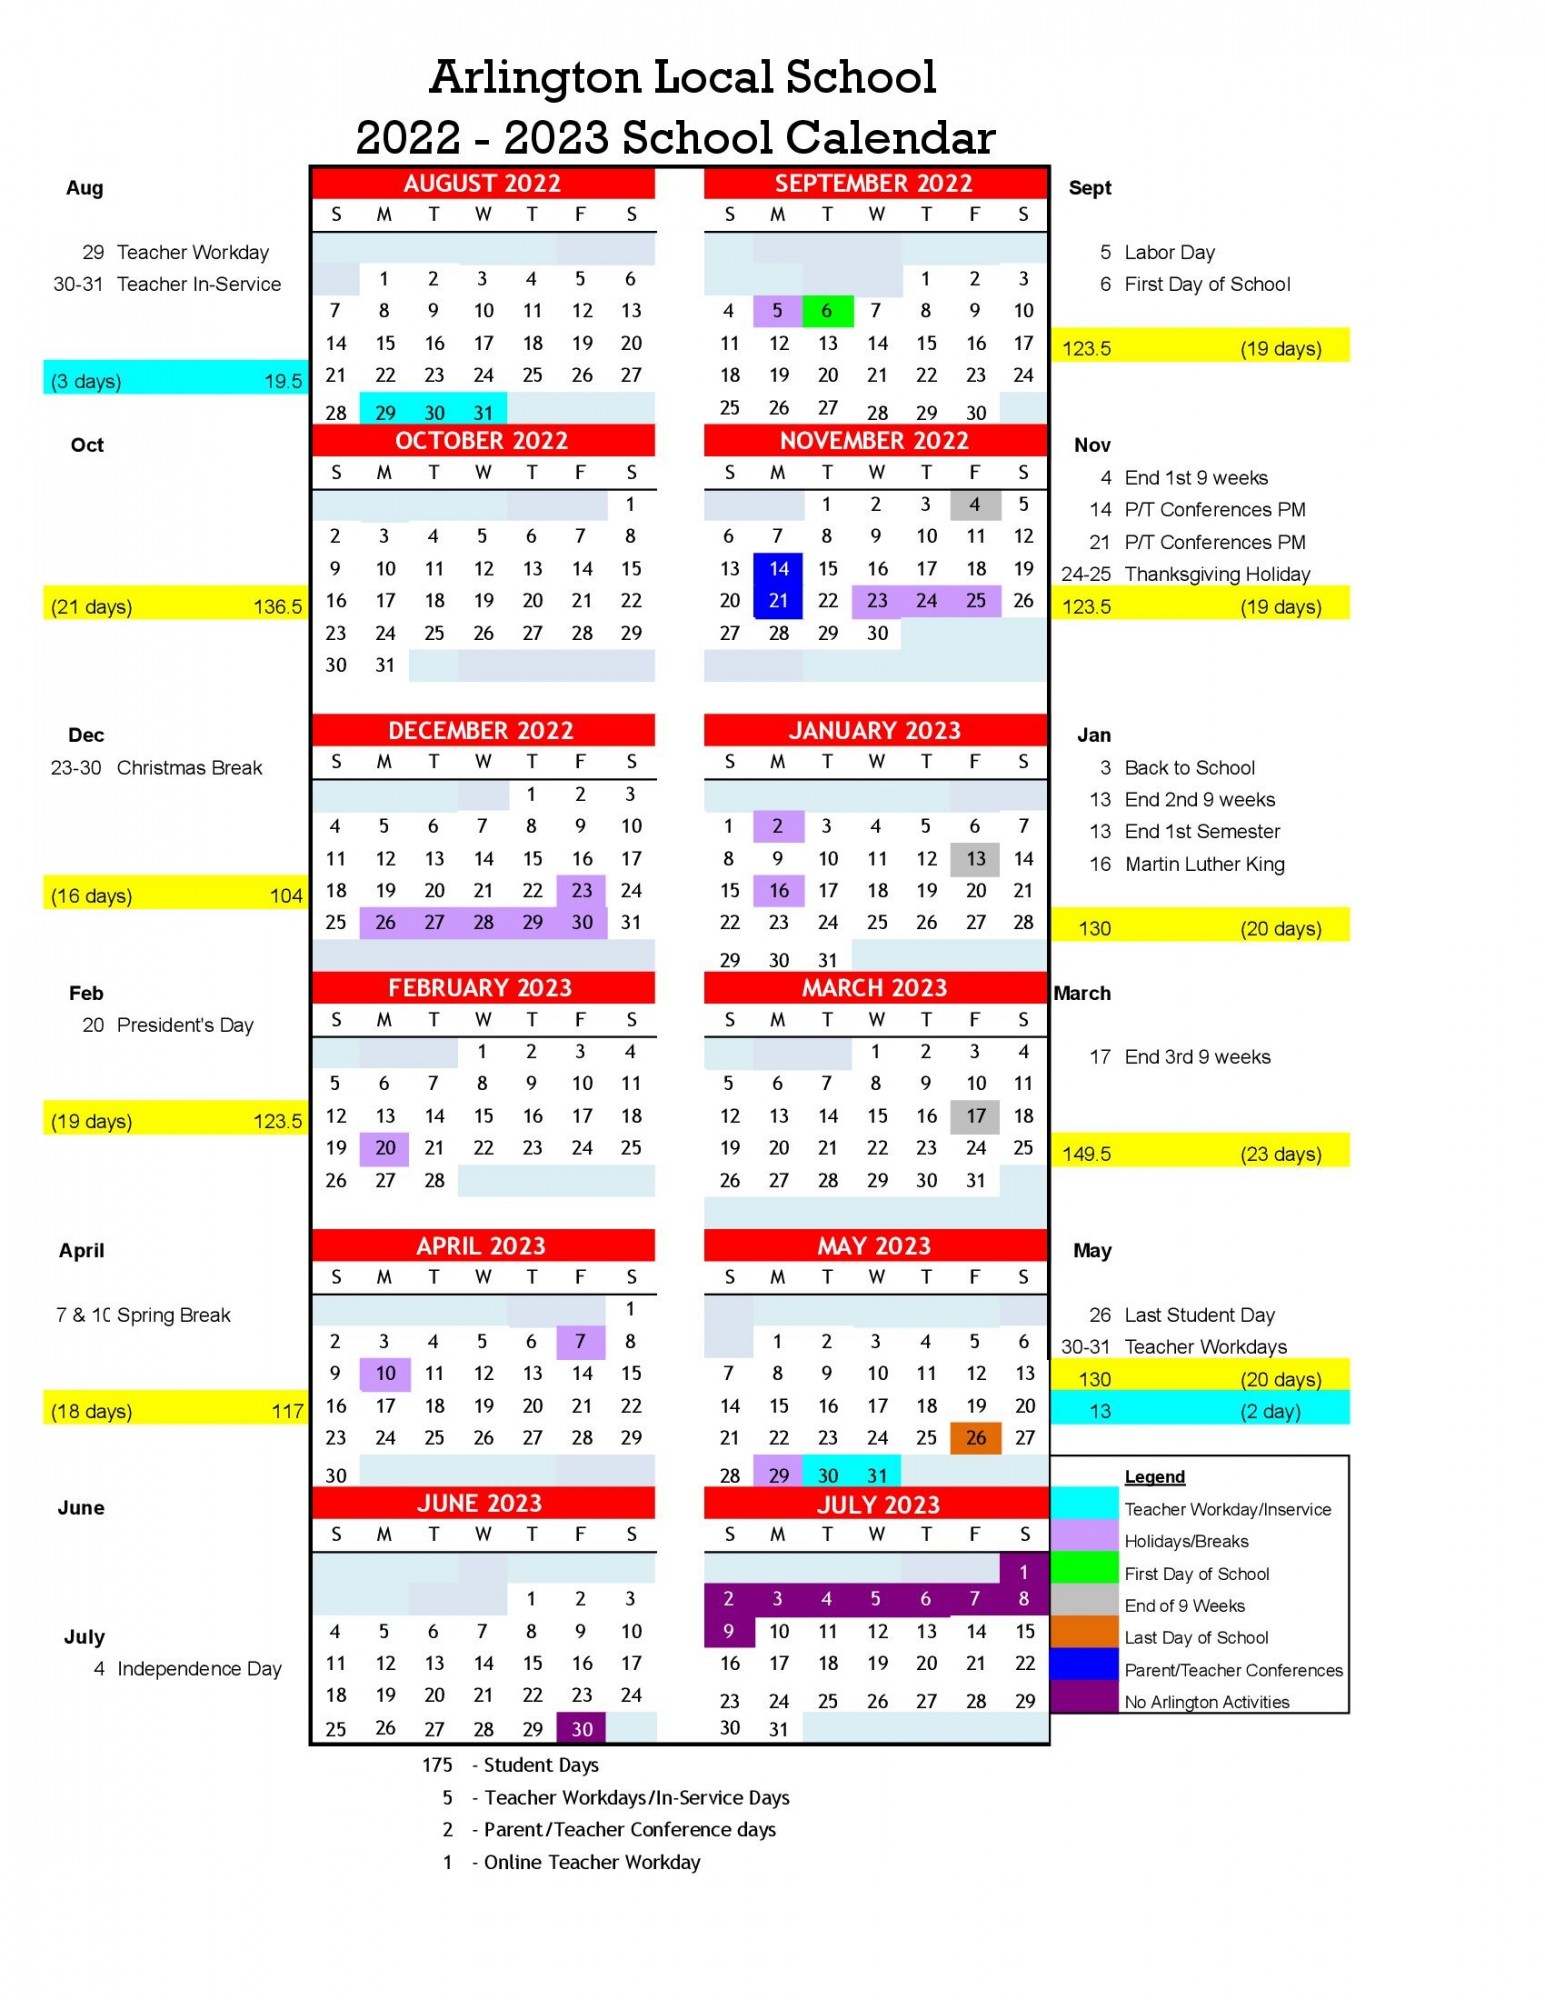 Arlington Local Schools Calendar 2024-2025 - MyCOLLEGEPOINTS